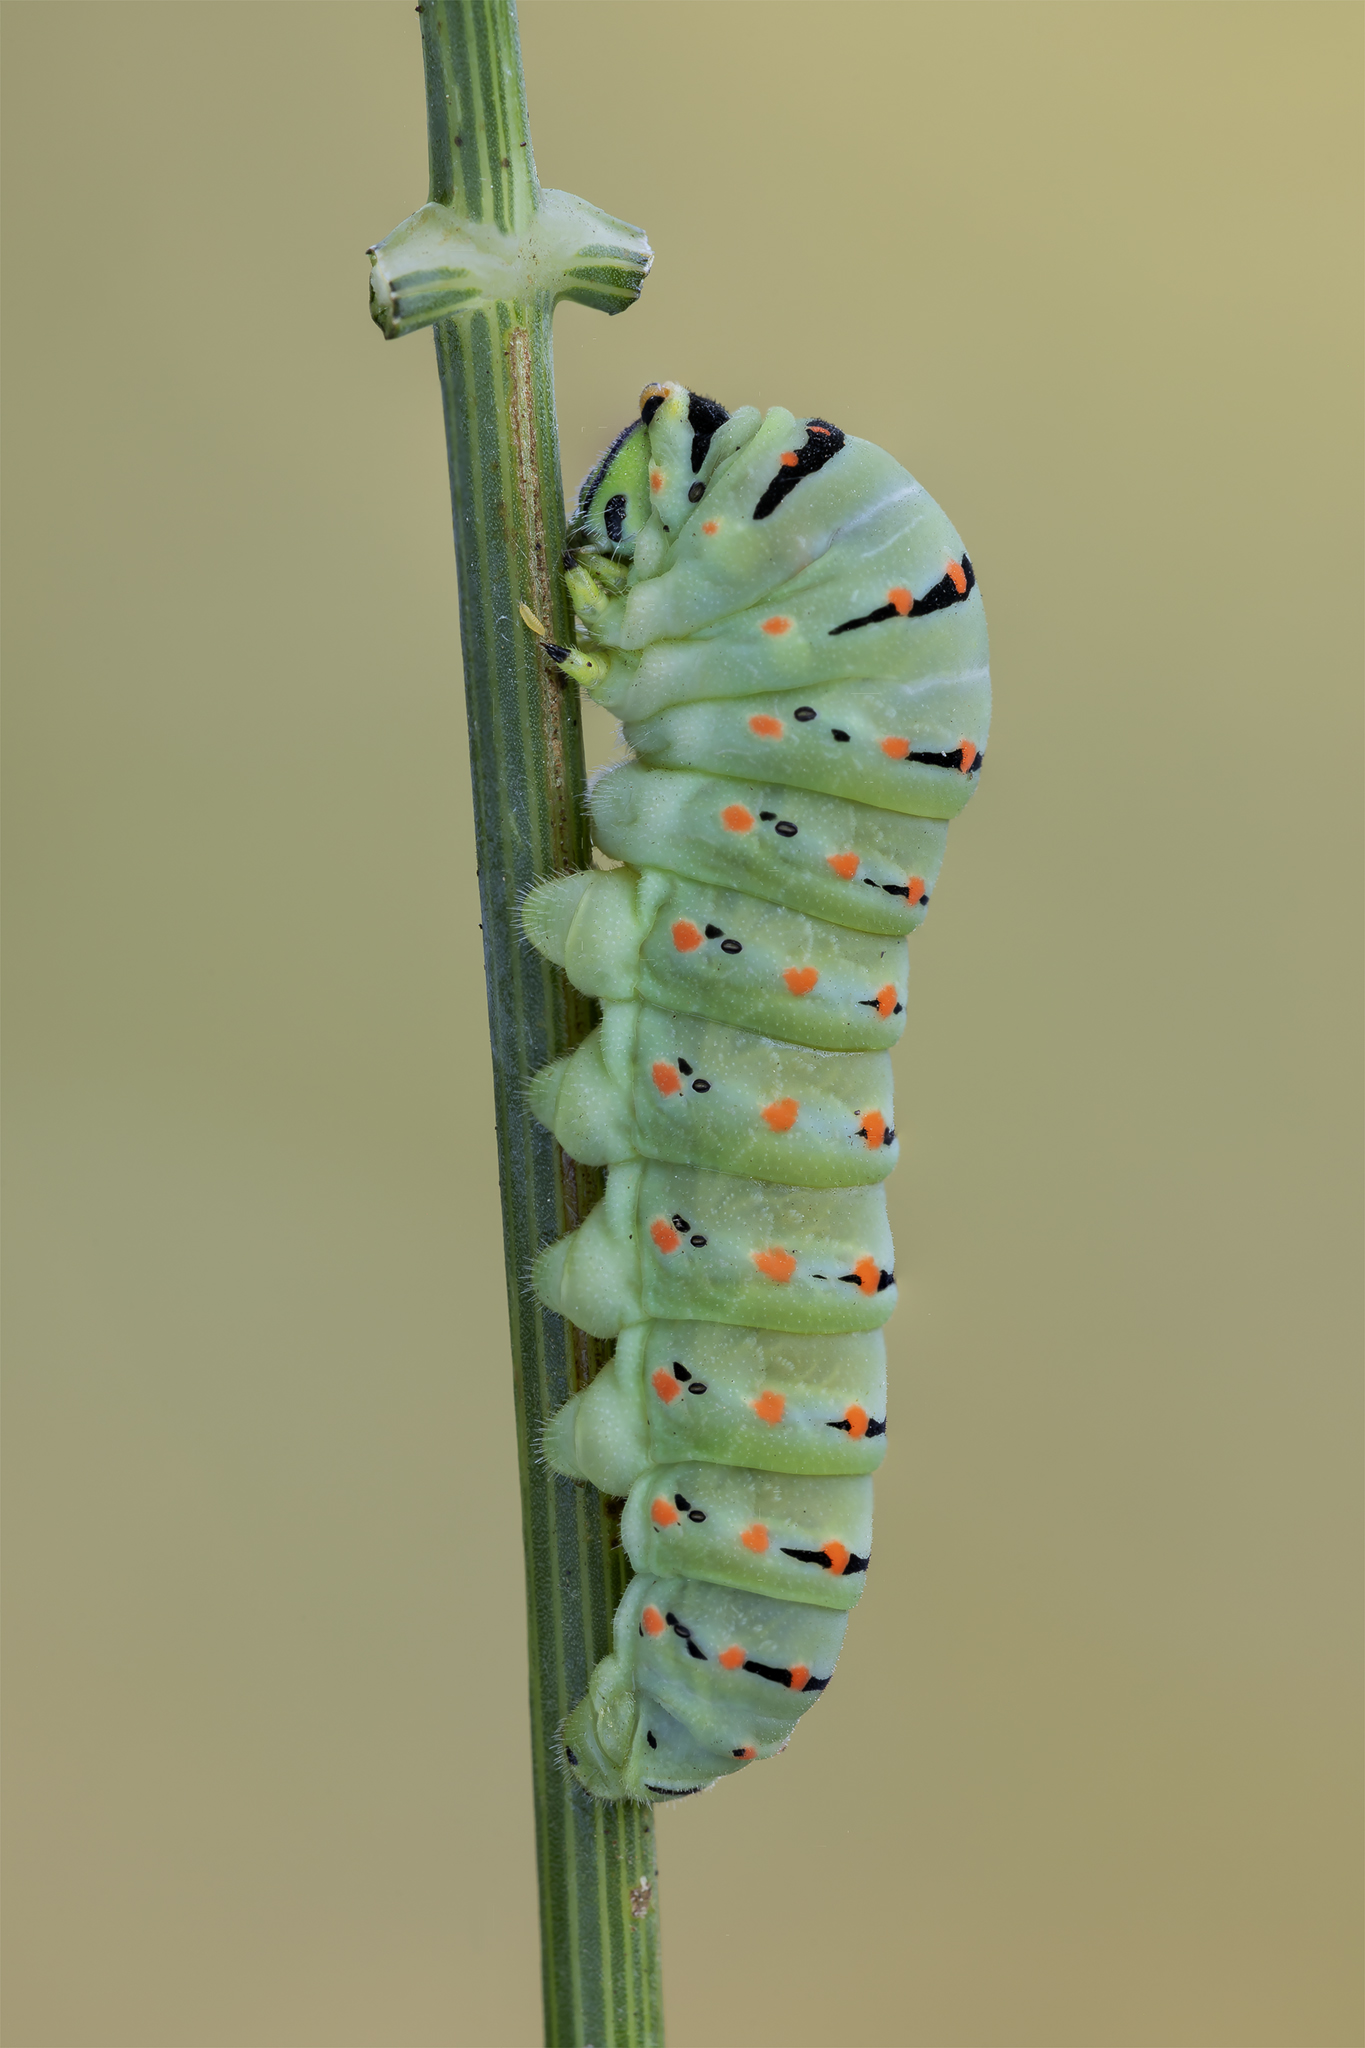 Macaone Caterpillar...